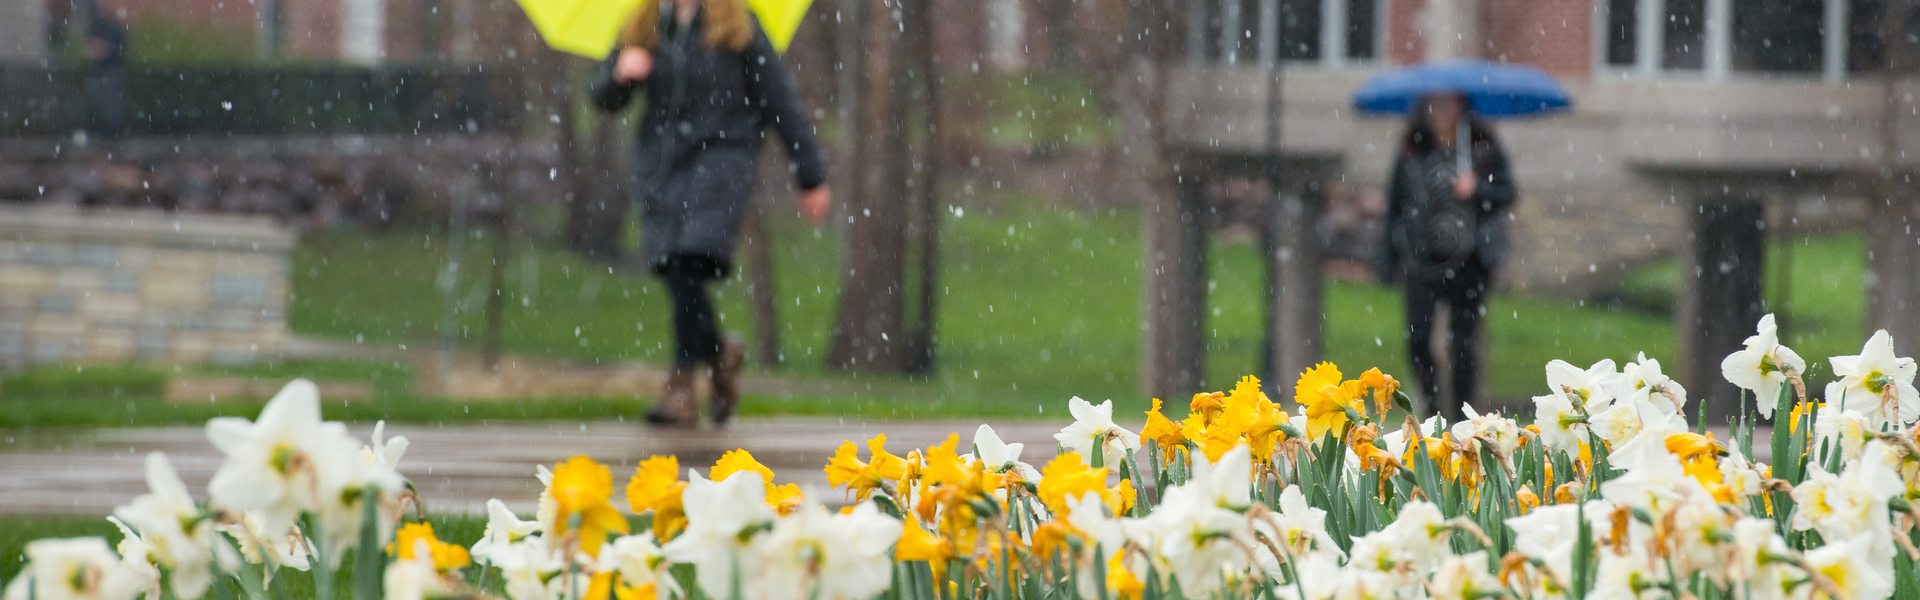 Rainy spring day on campus, colorful umbrellas